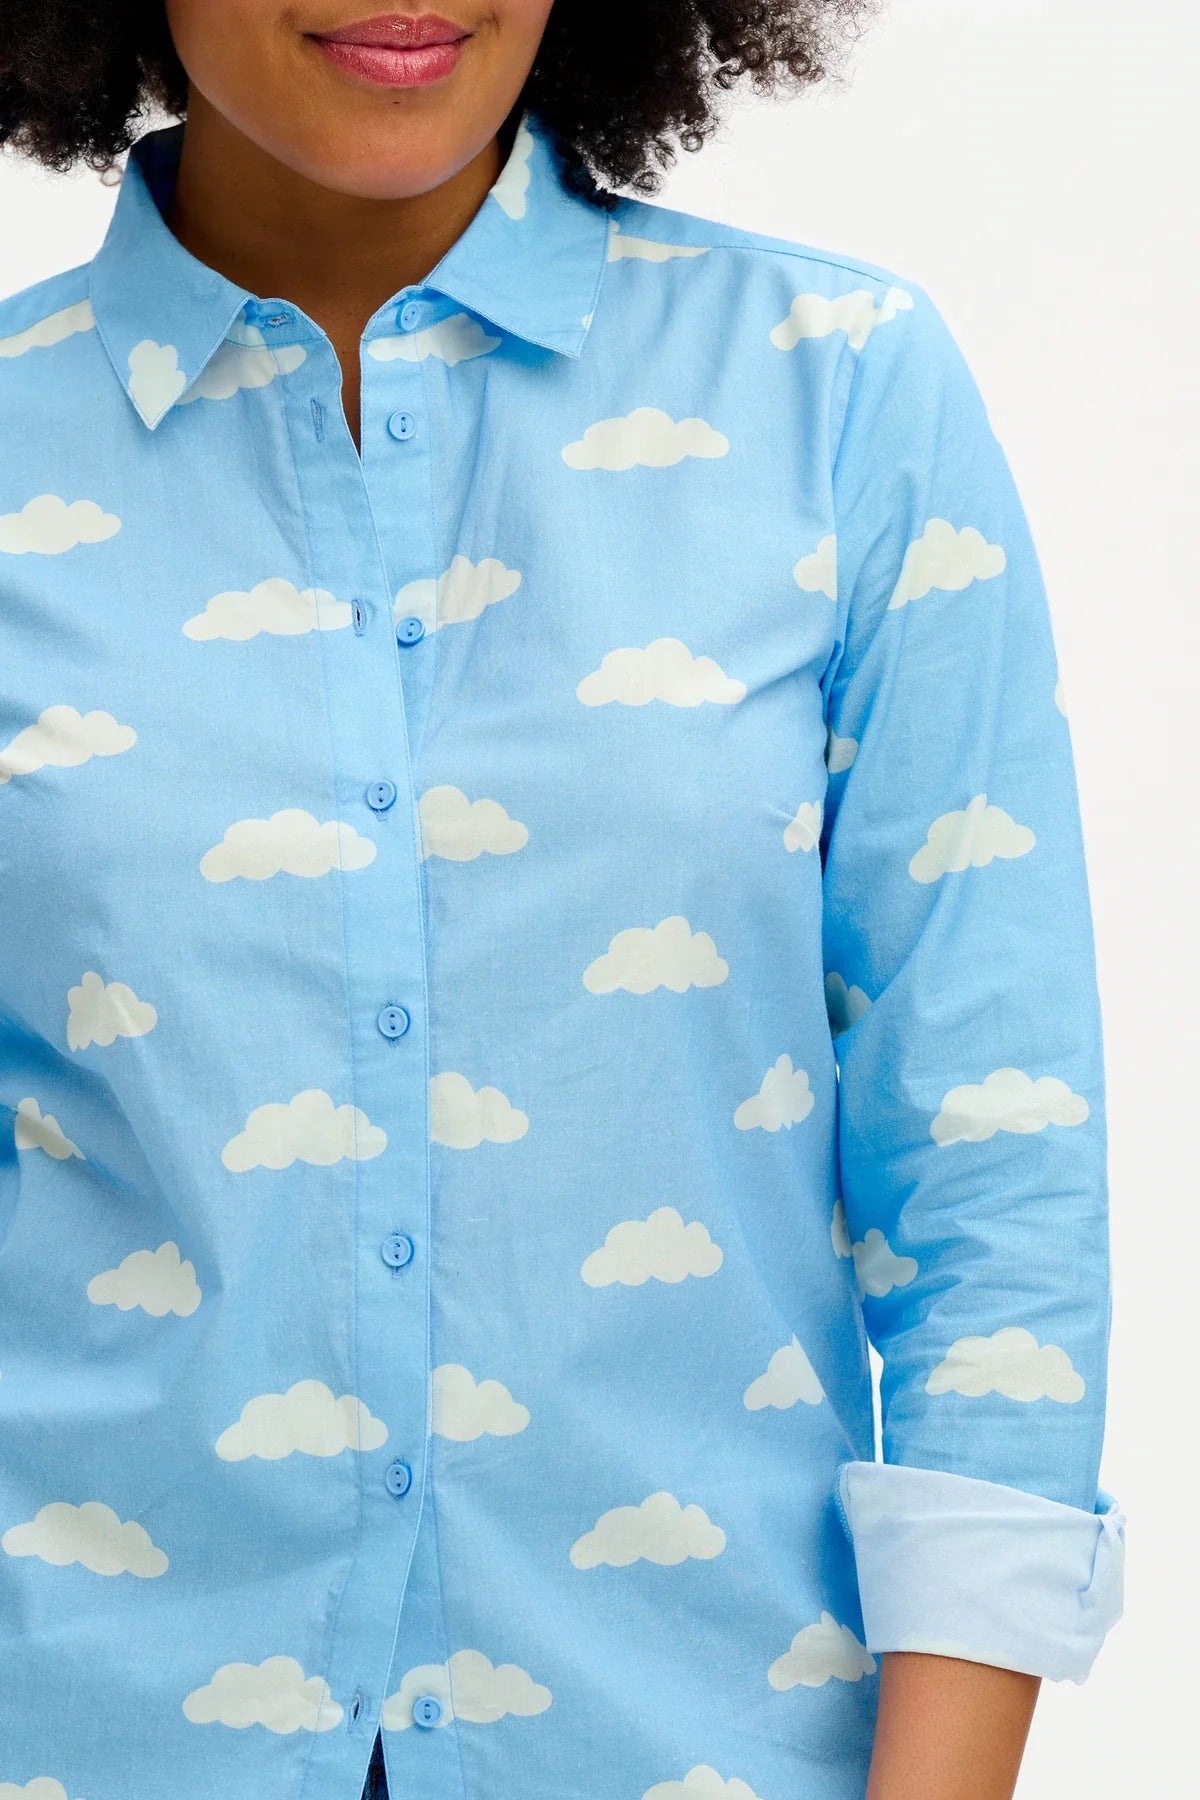 *Waverly Shirt - Blue, Cloudy Skies*